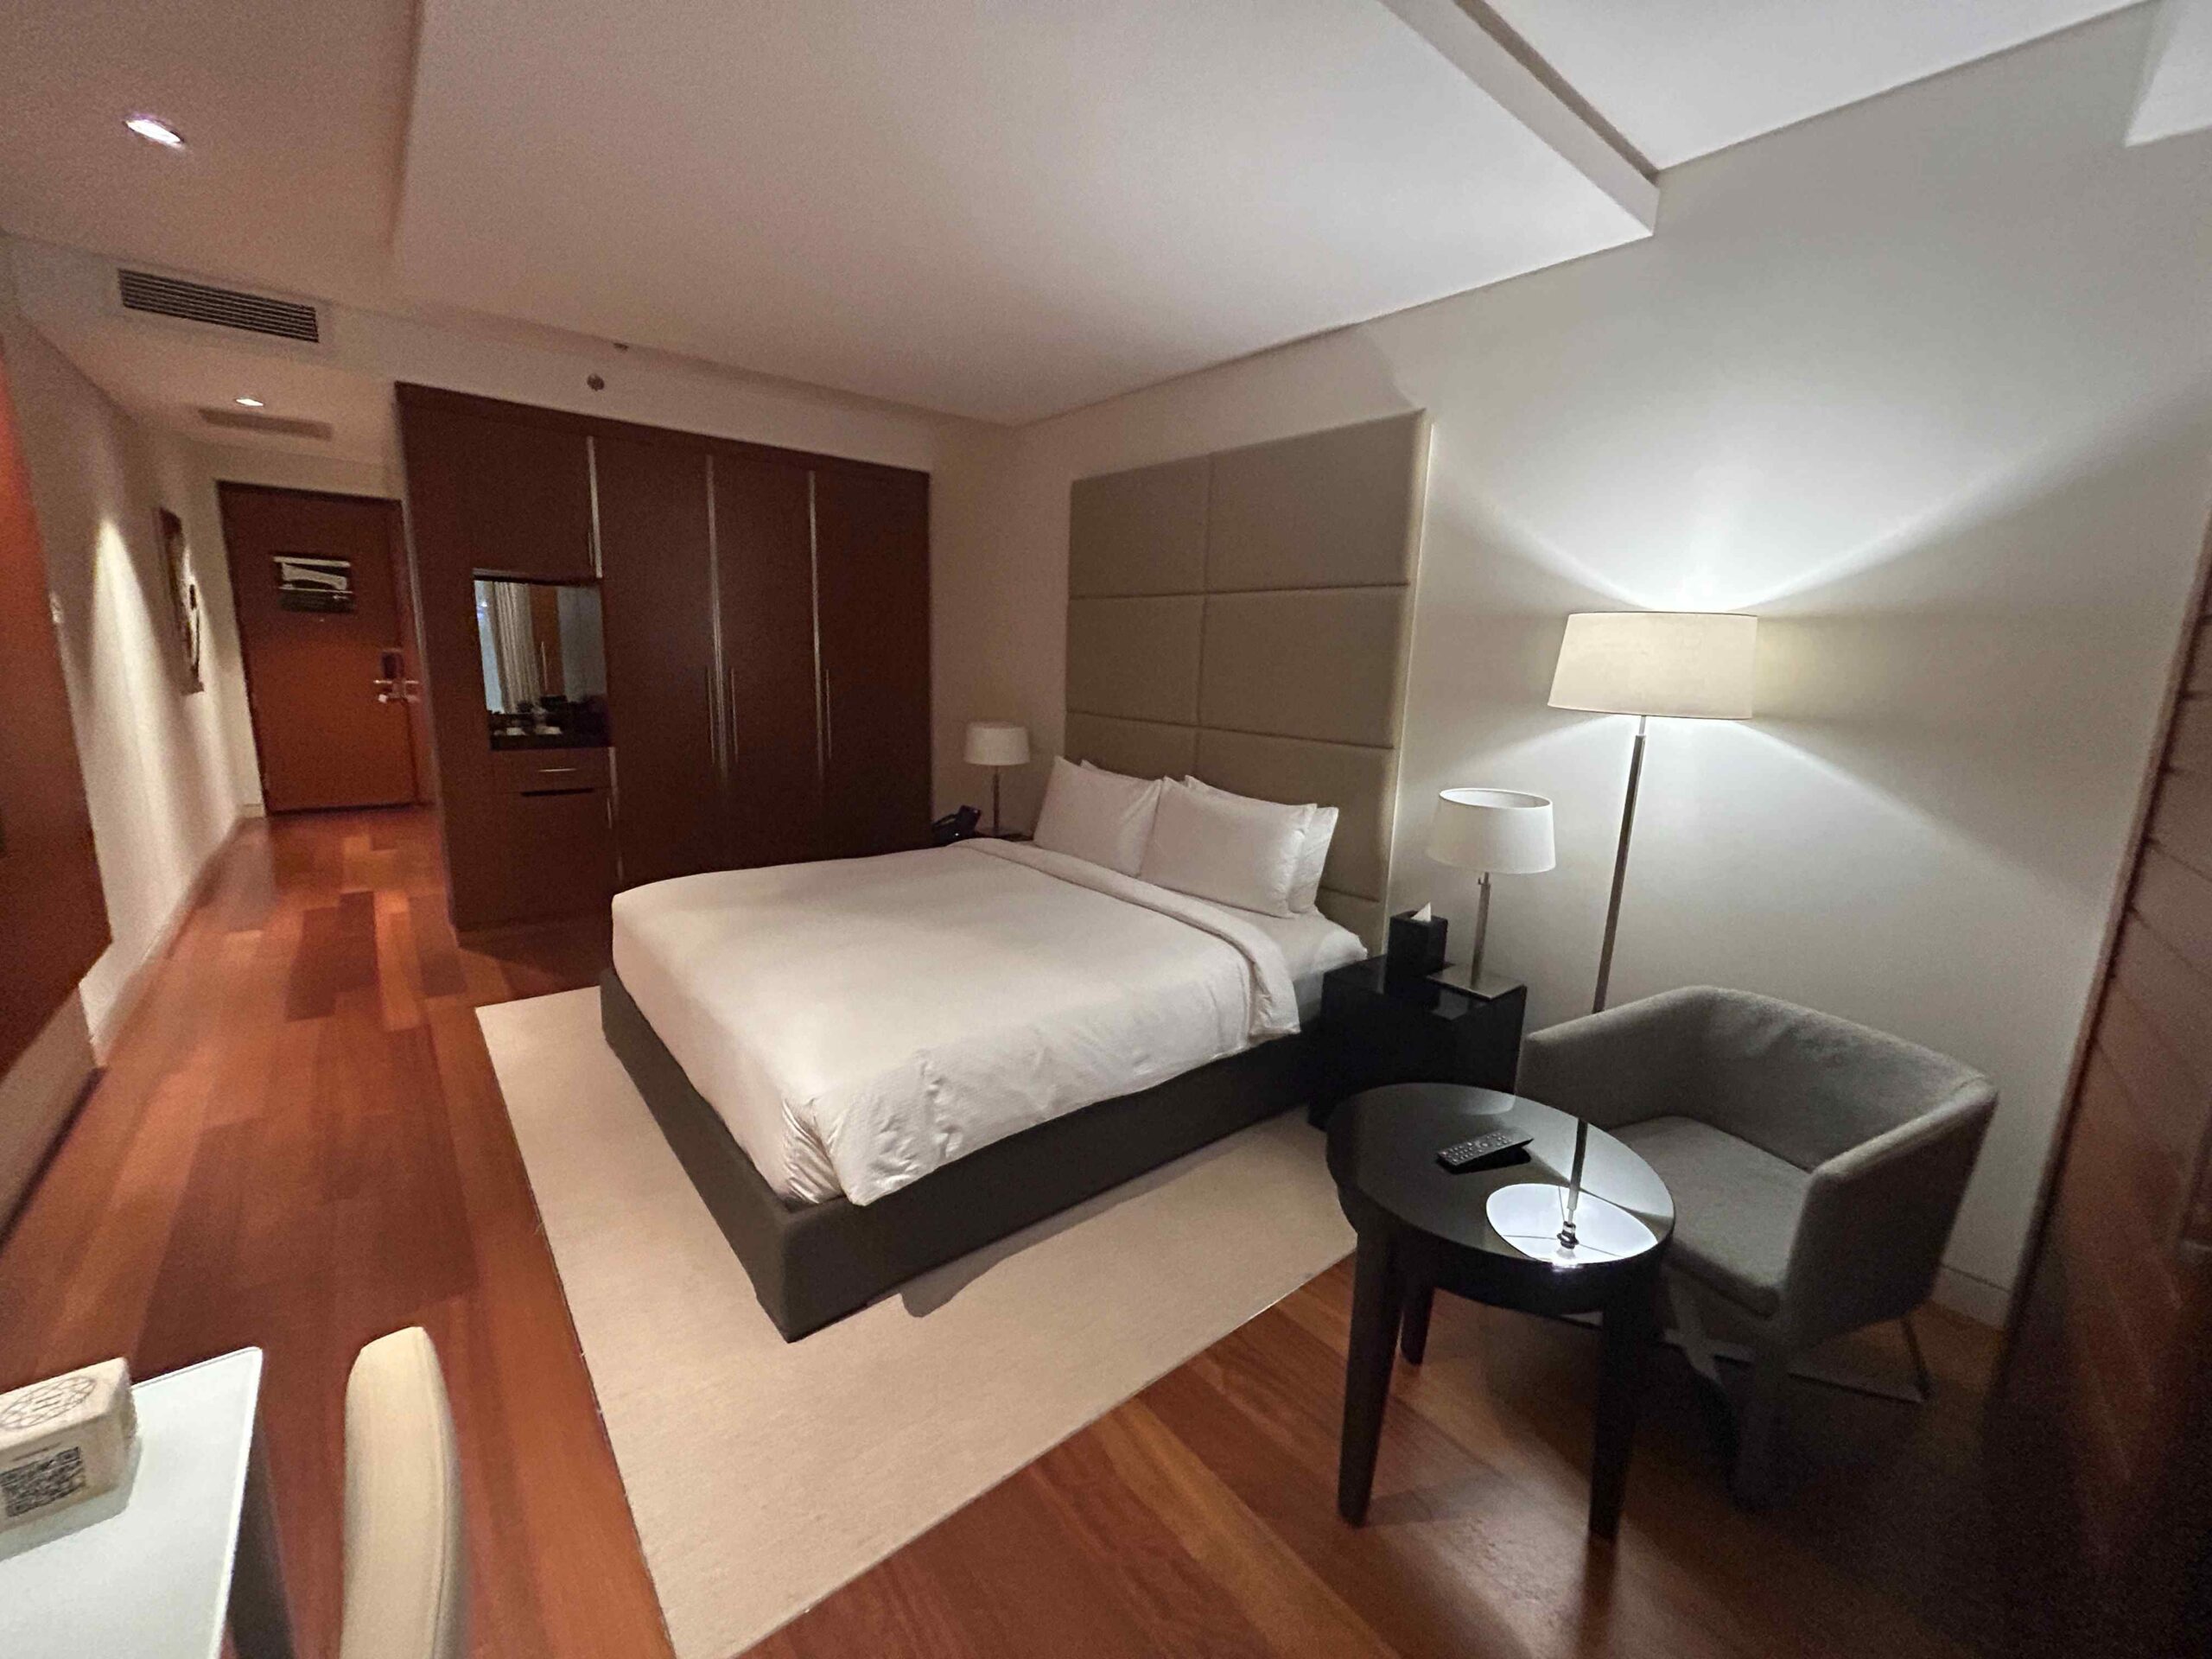 Doha transit hotel Bedroom 2